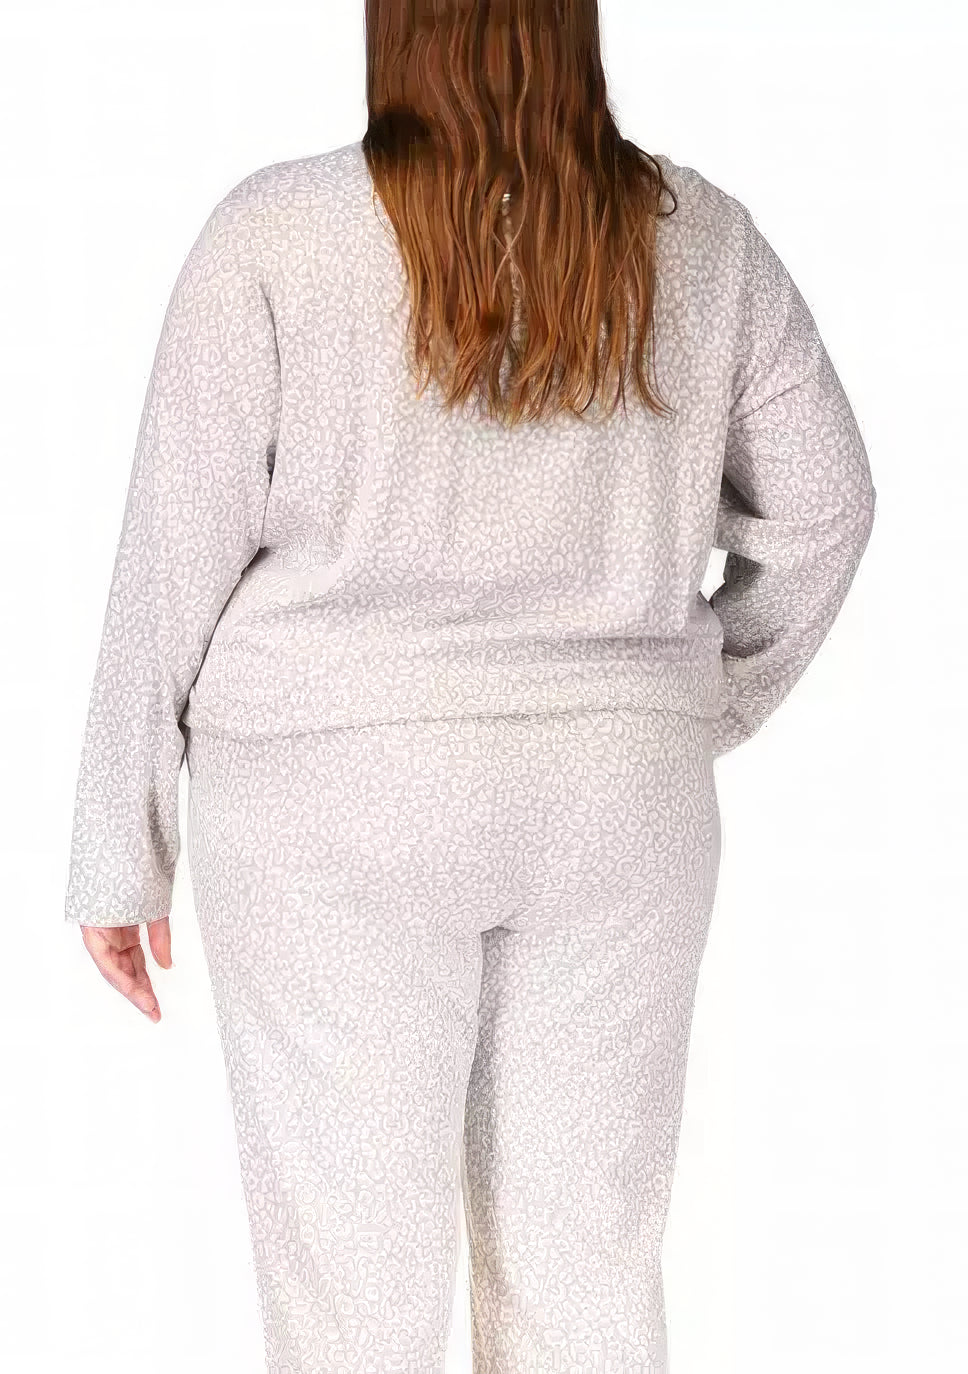 Michael Kors Women's Plus Jacquard Animal-Print Top  Color Pearl Heather Size 3X